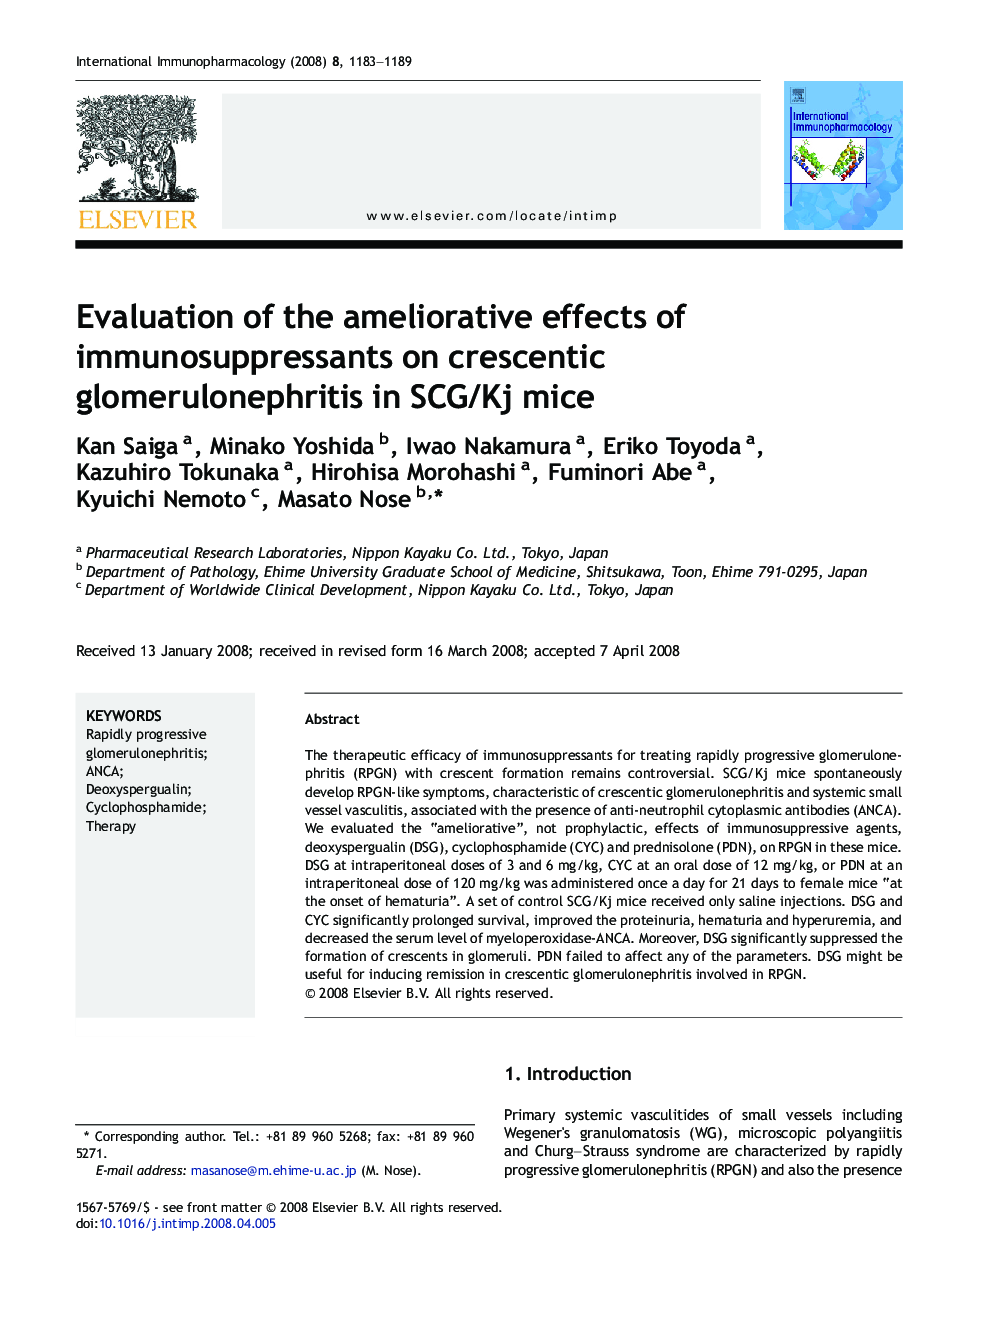 Evaluation of the ameliorative effects of immunosuppressants on crescentic glomerulonephritis in SCG/Kj mice